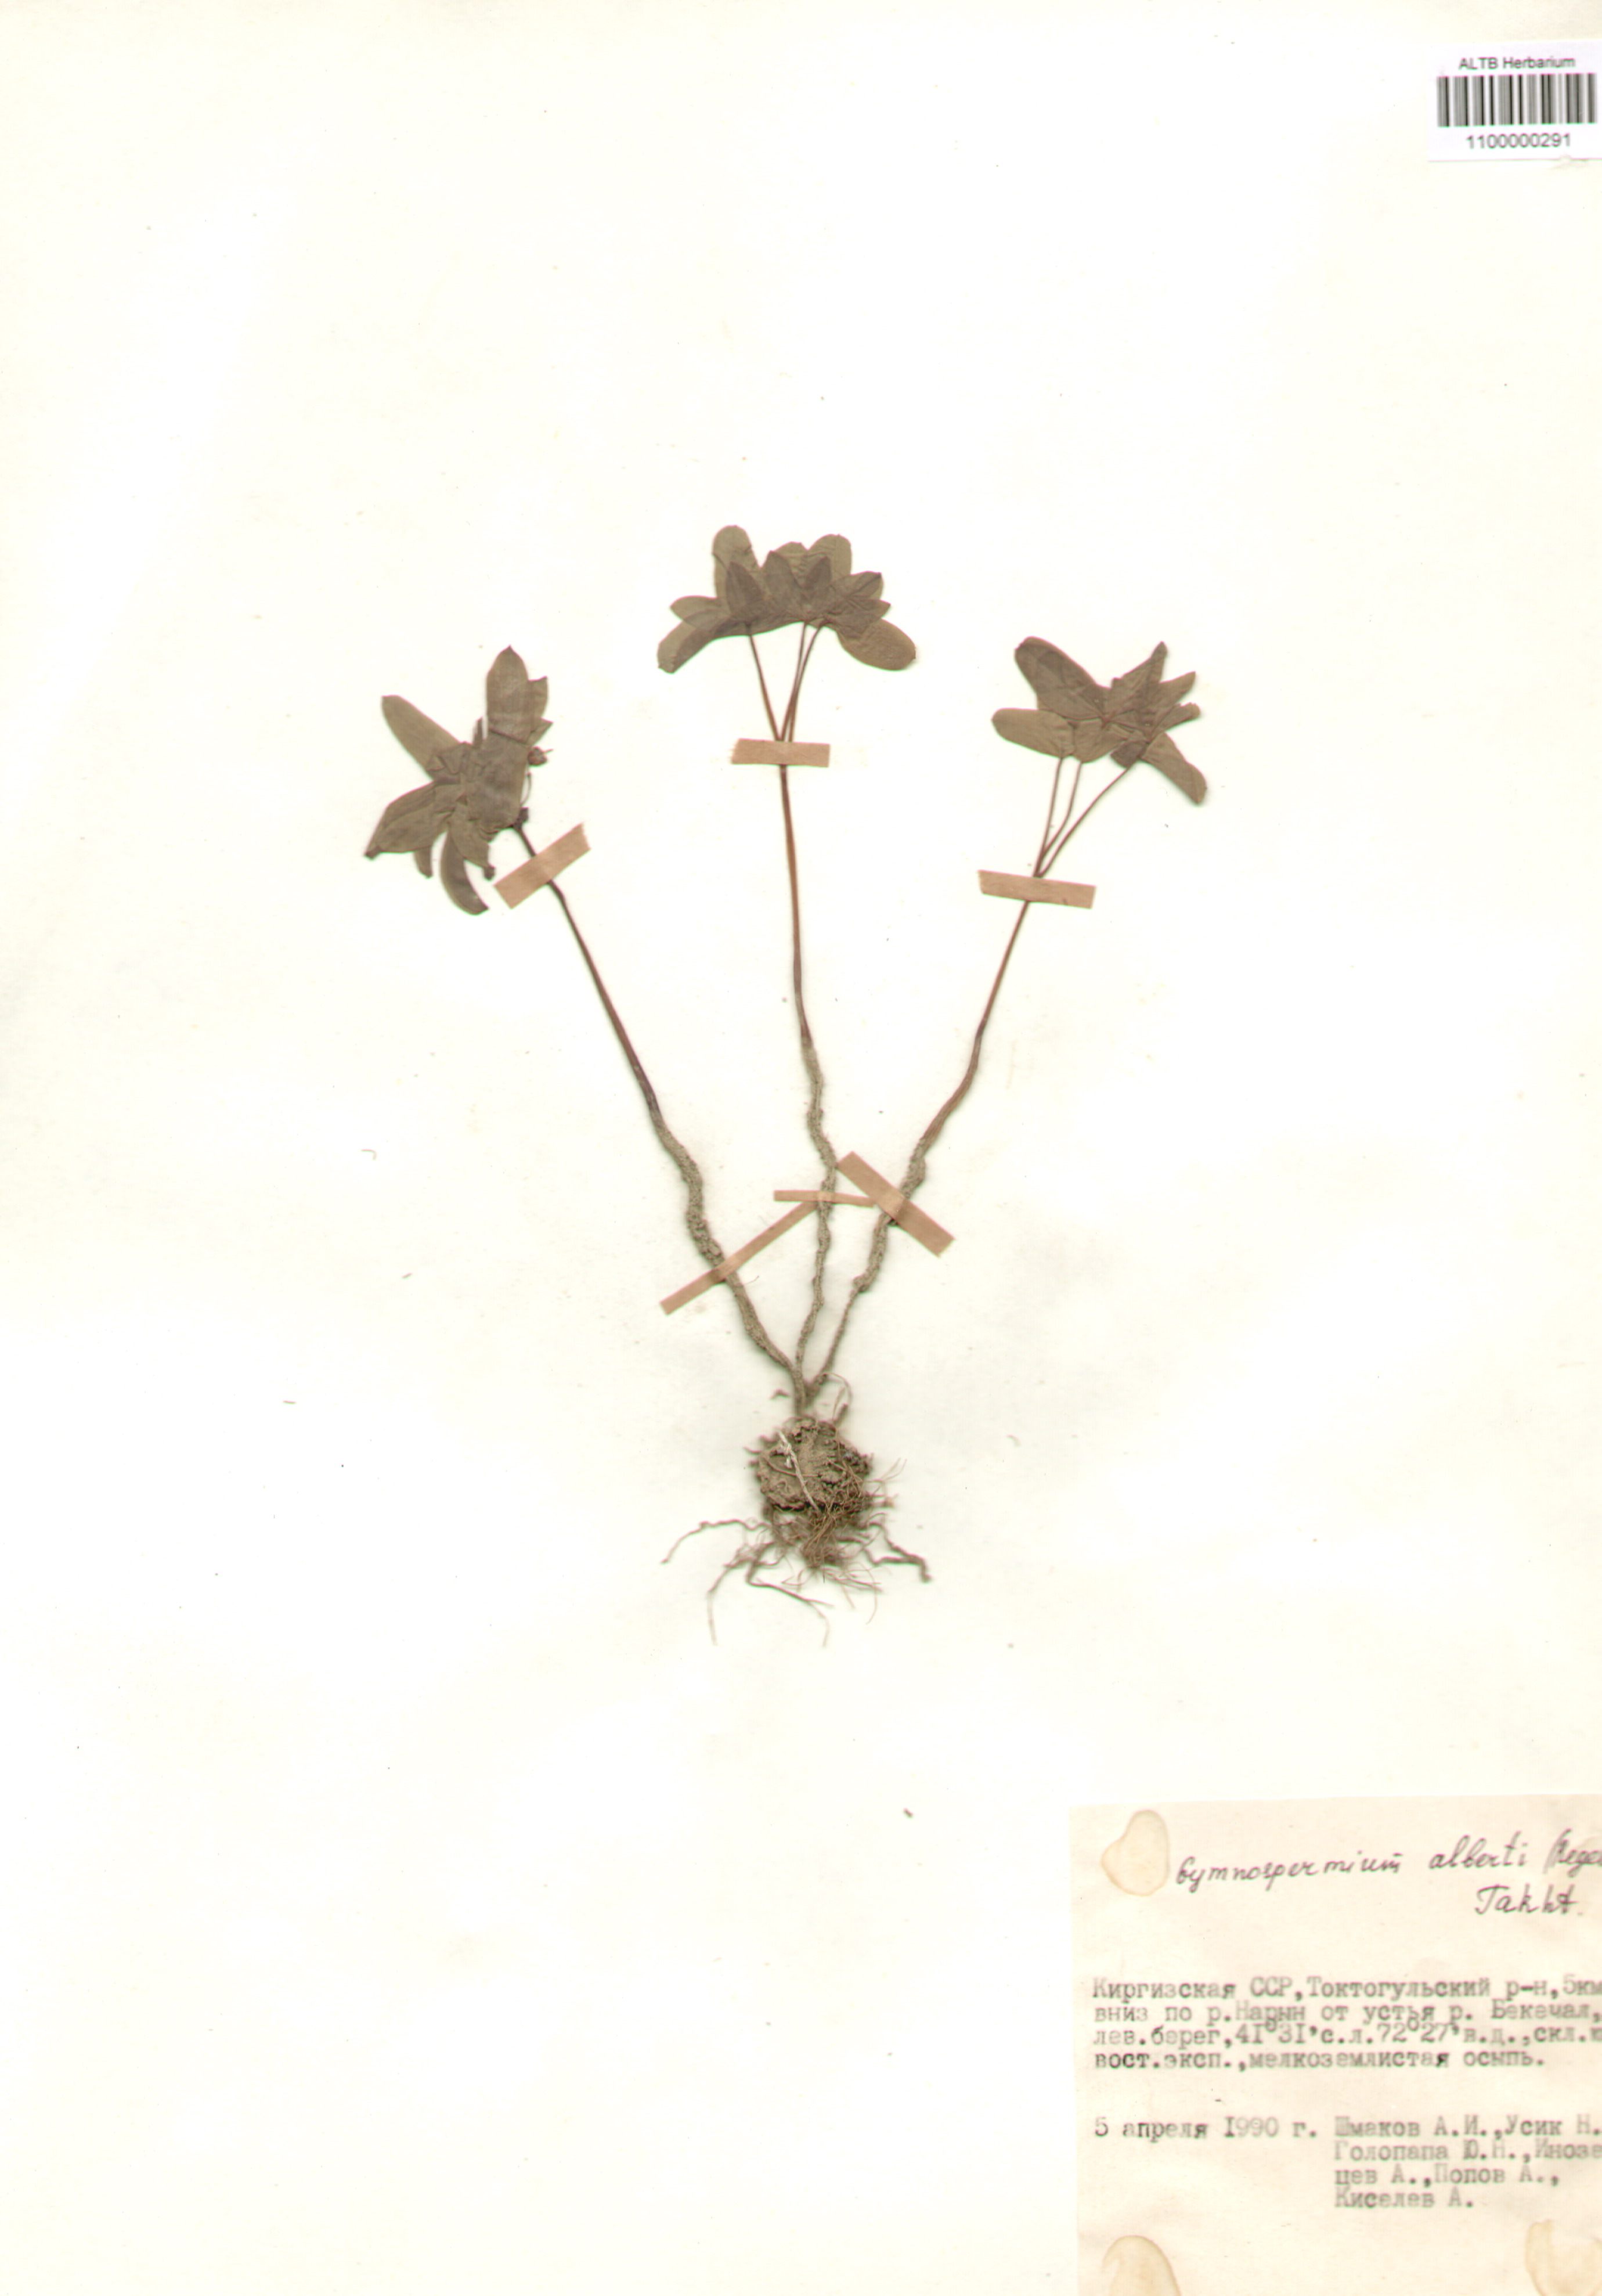 Berberidaceae,Gymnospermium alberti (Regel) Takht.